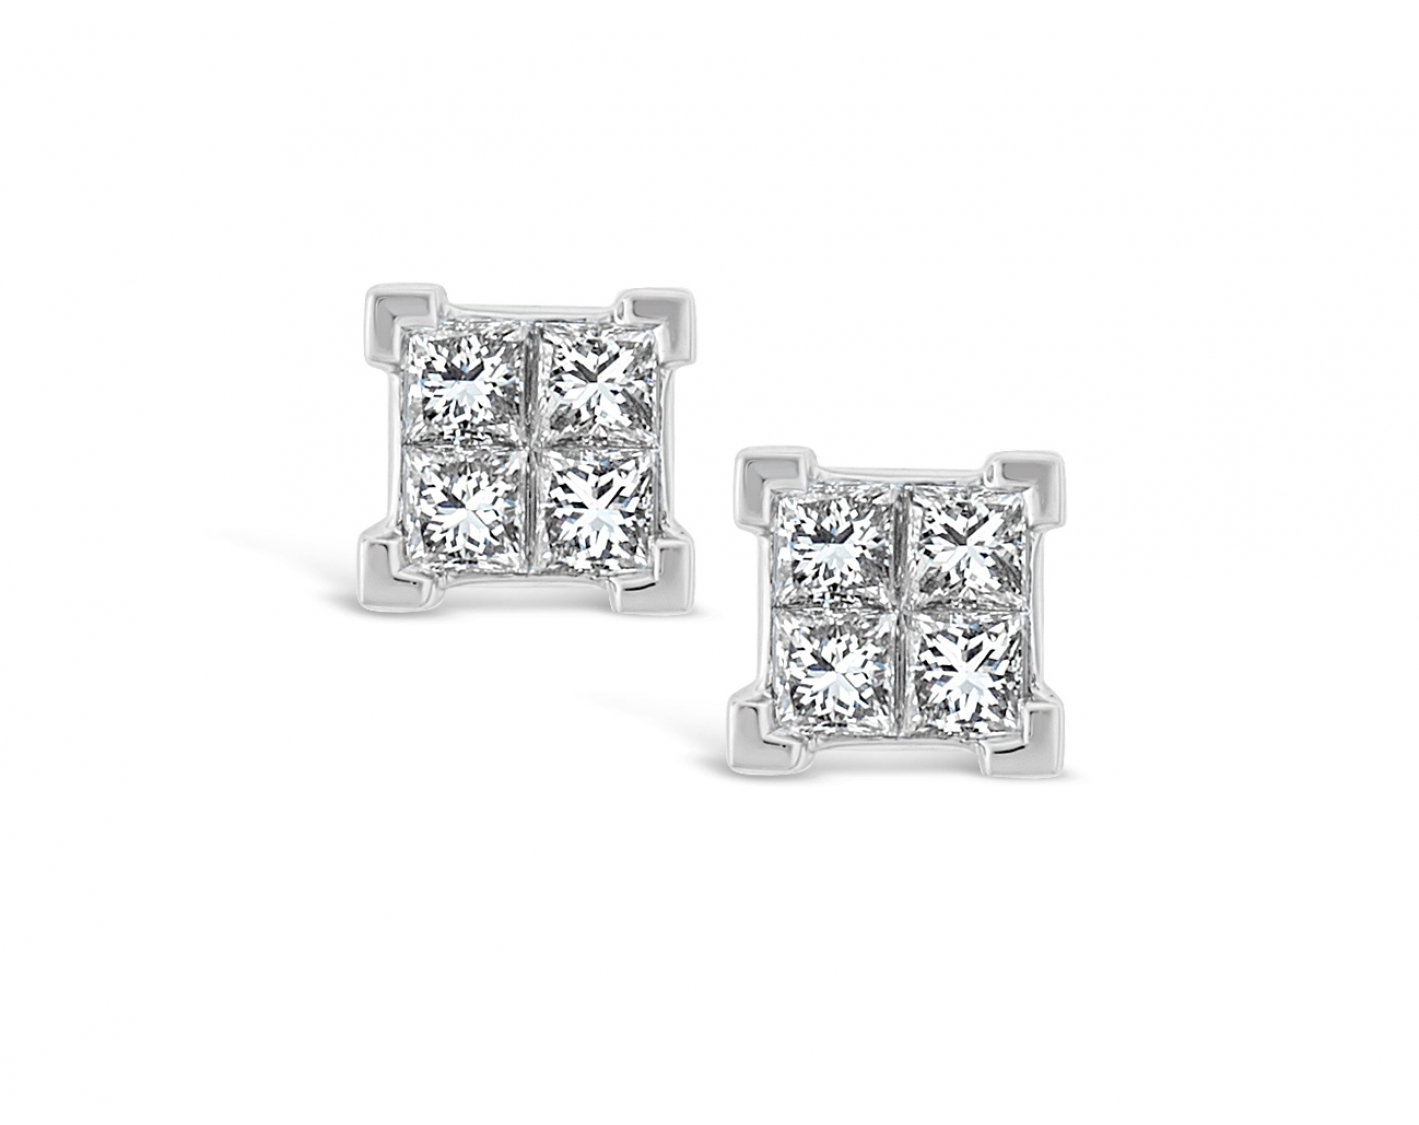 18k white gold princess cut invisible set diamond earrings Photos & images